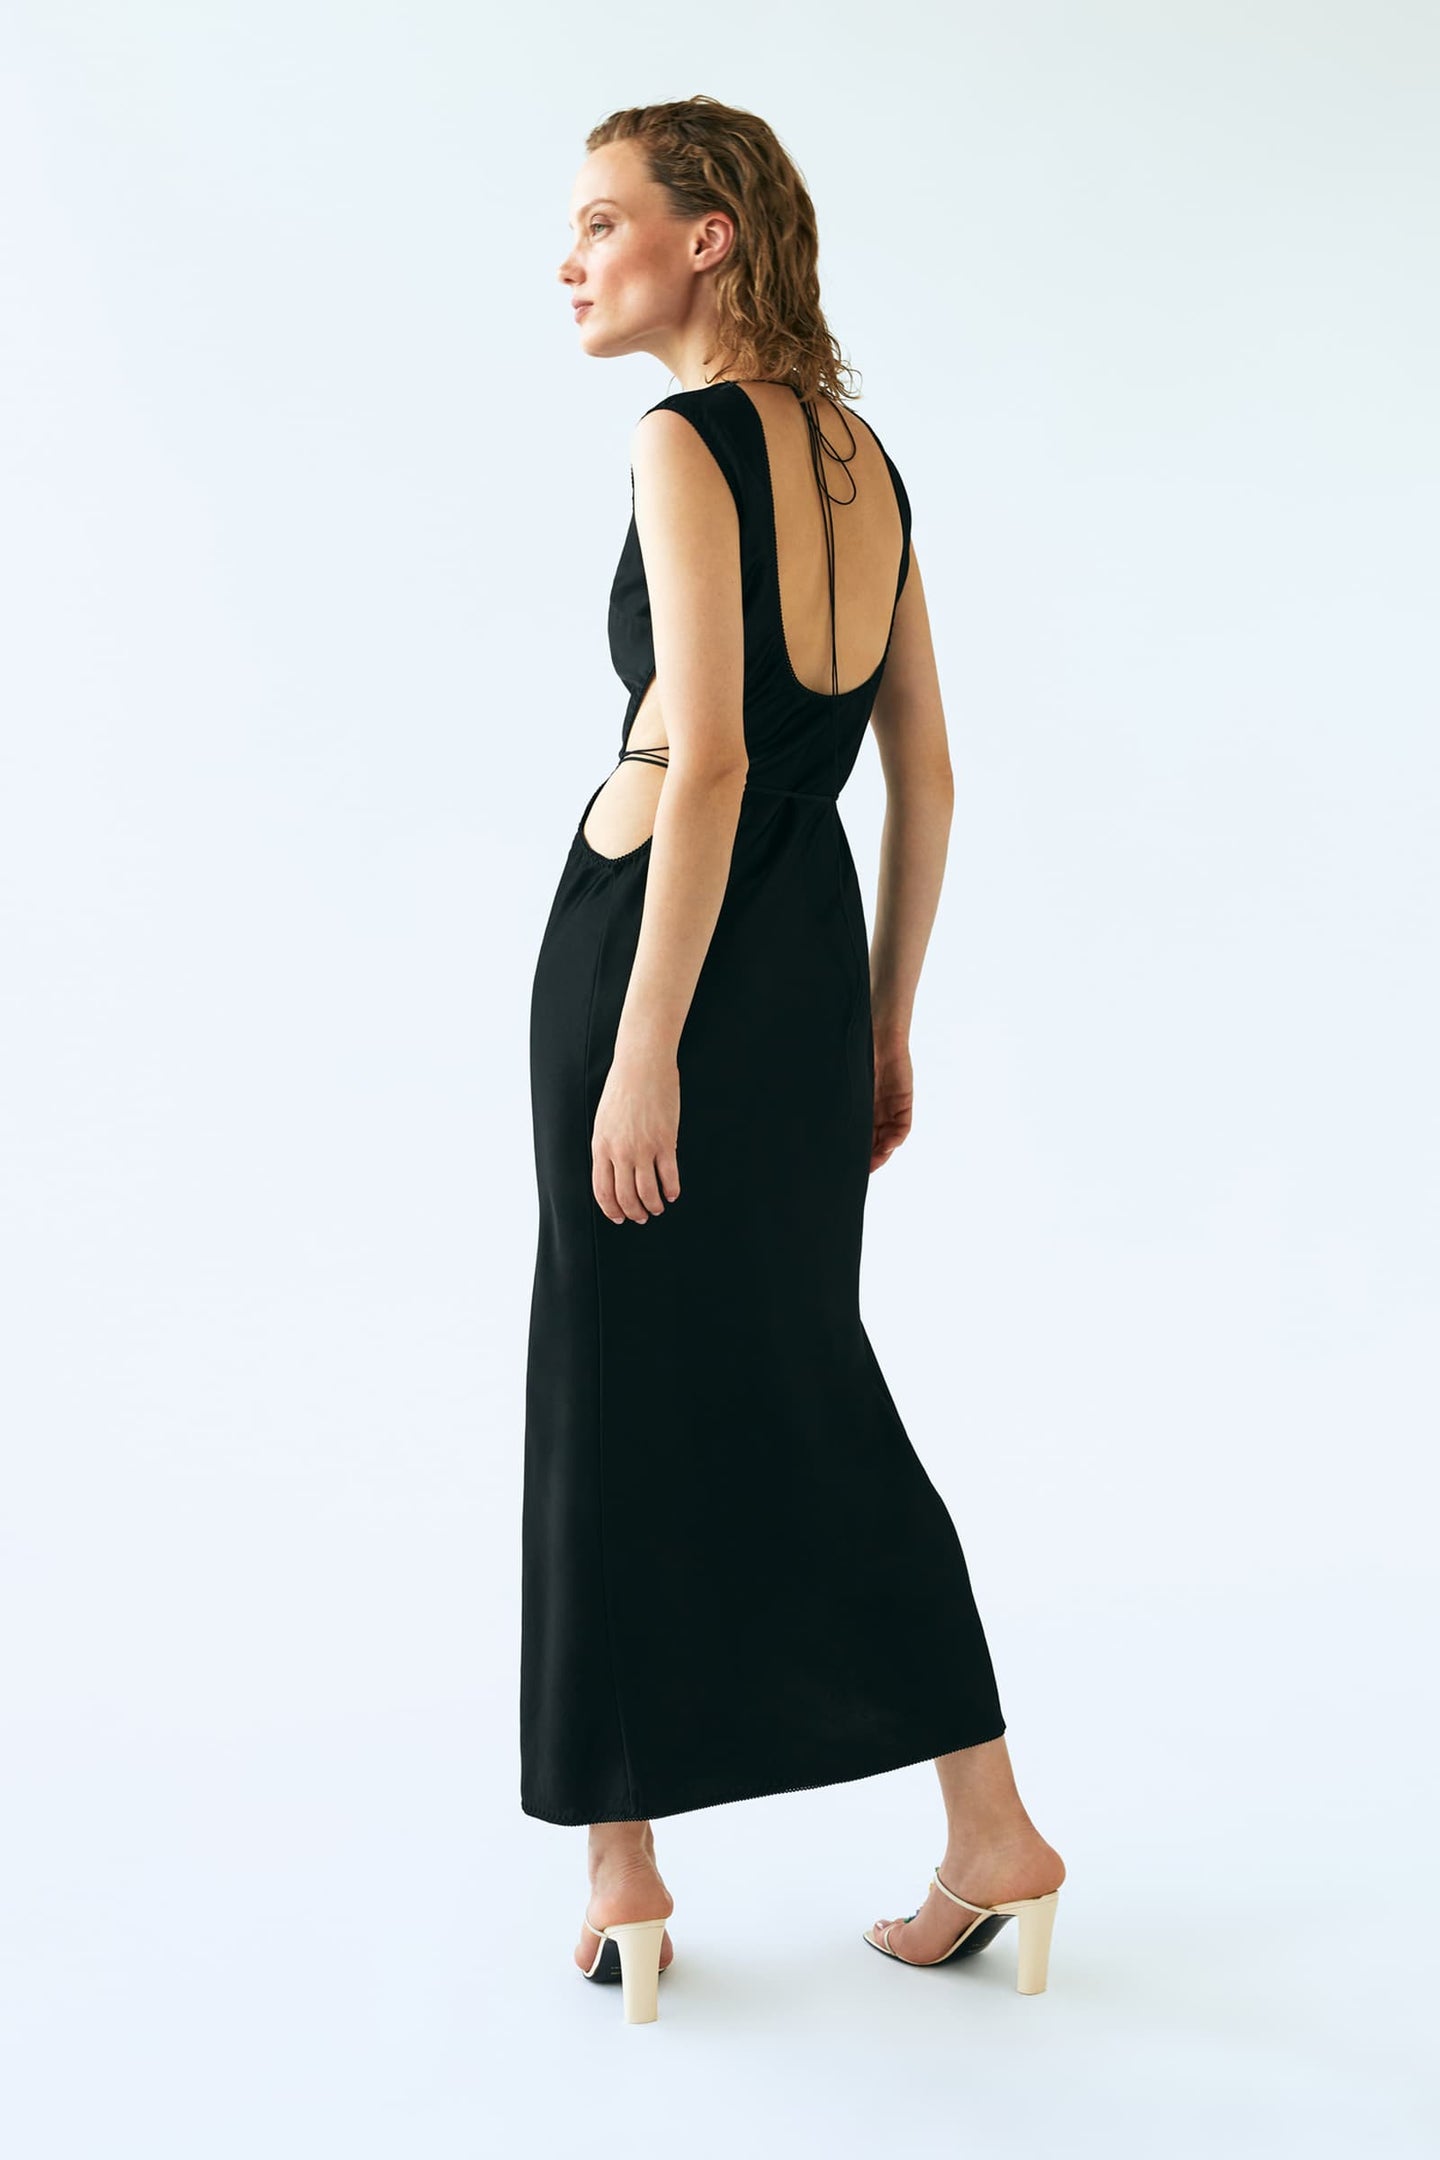 Model in Shu black dress back view